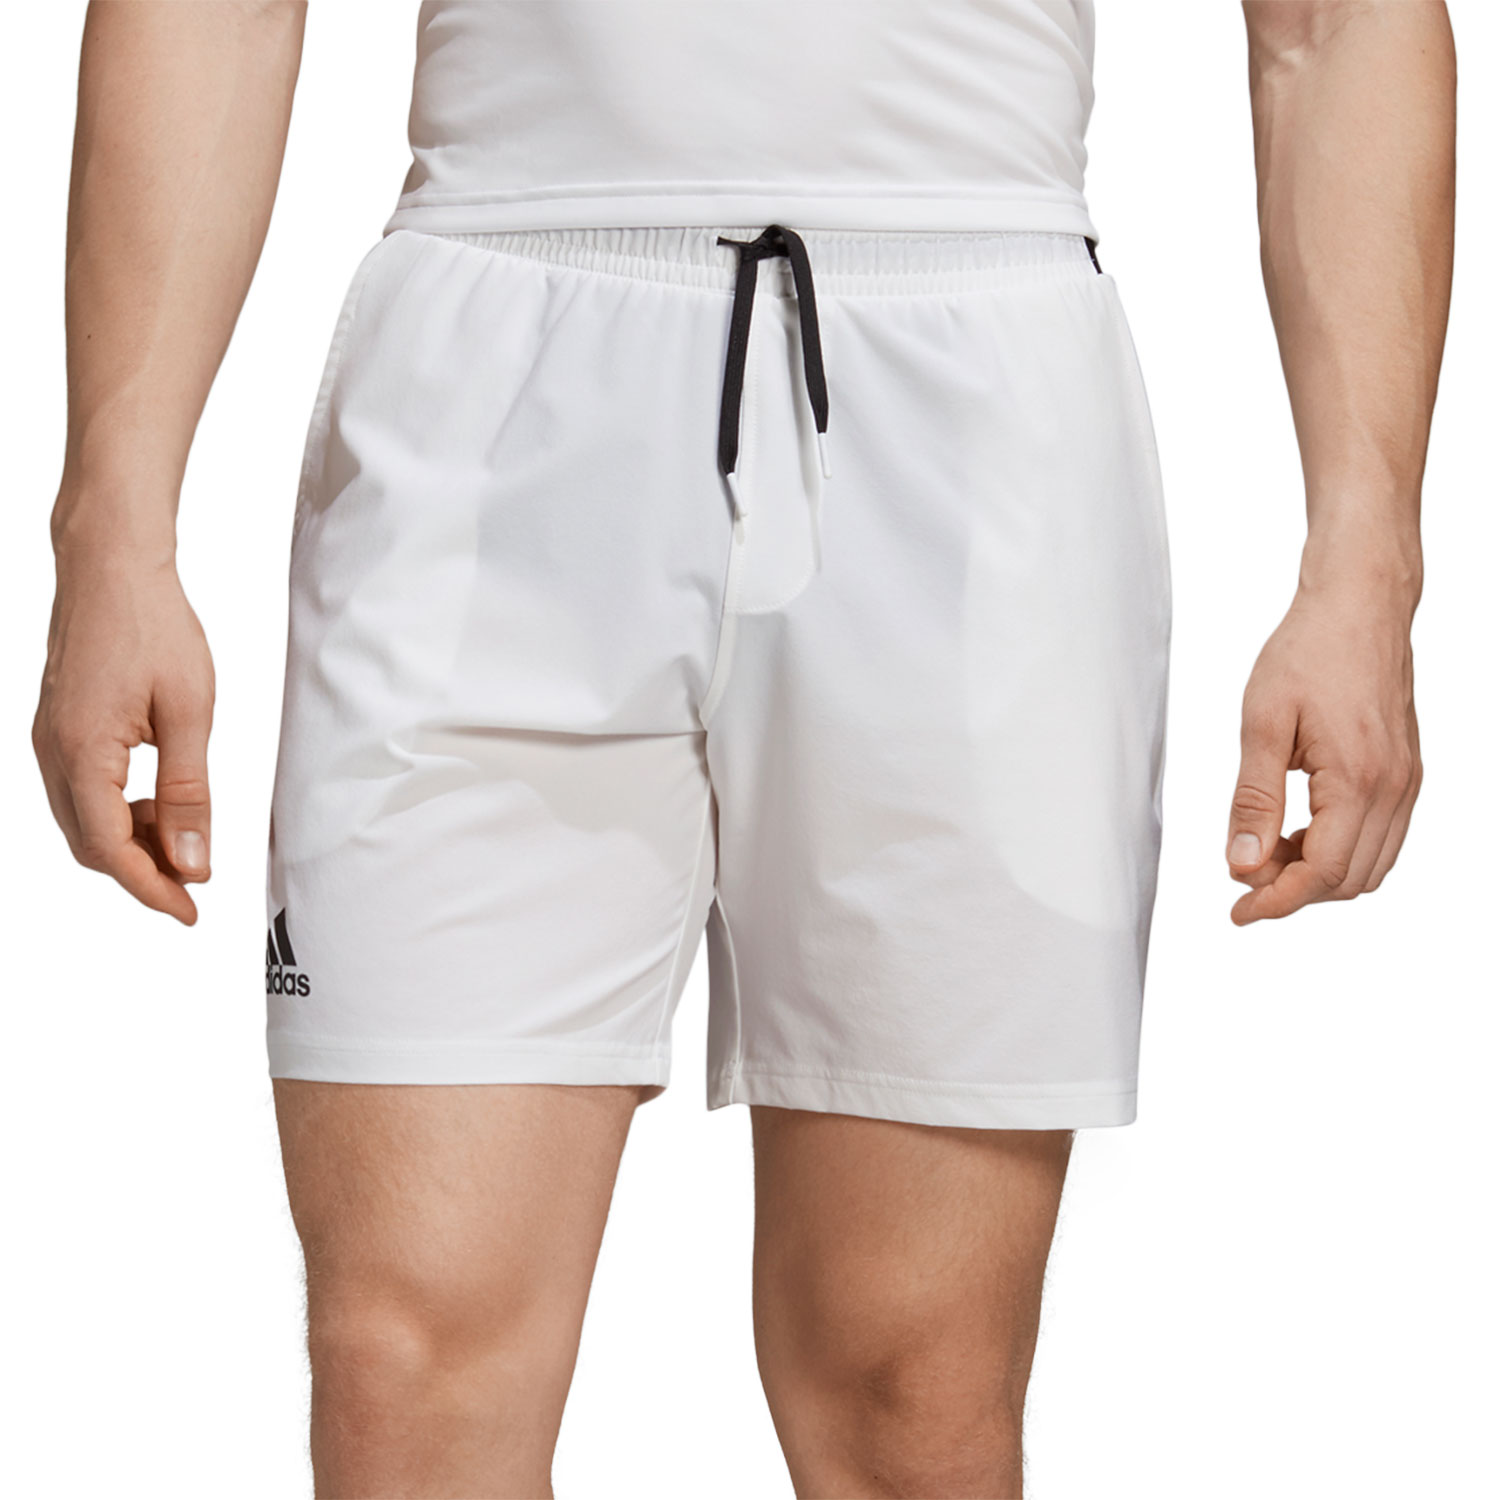 Head Tennis Shorts Size Chart